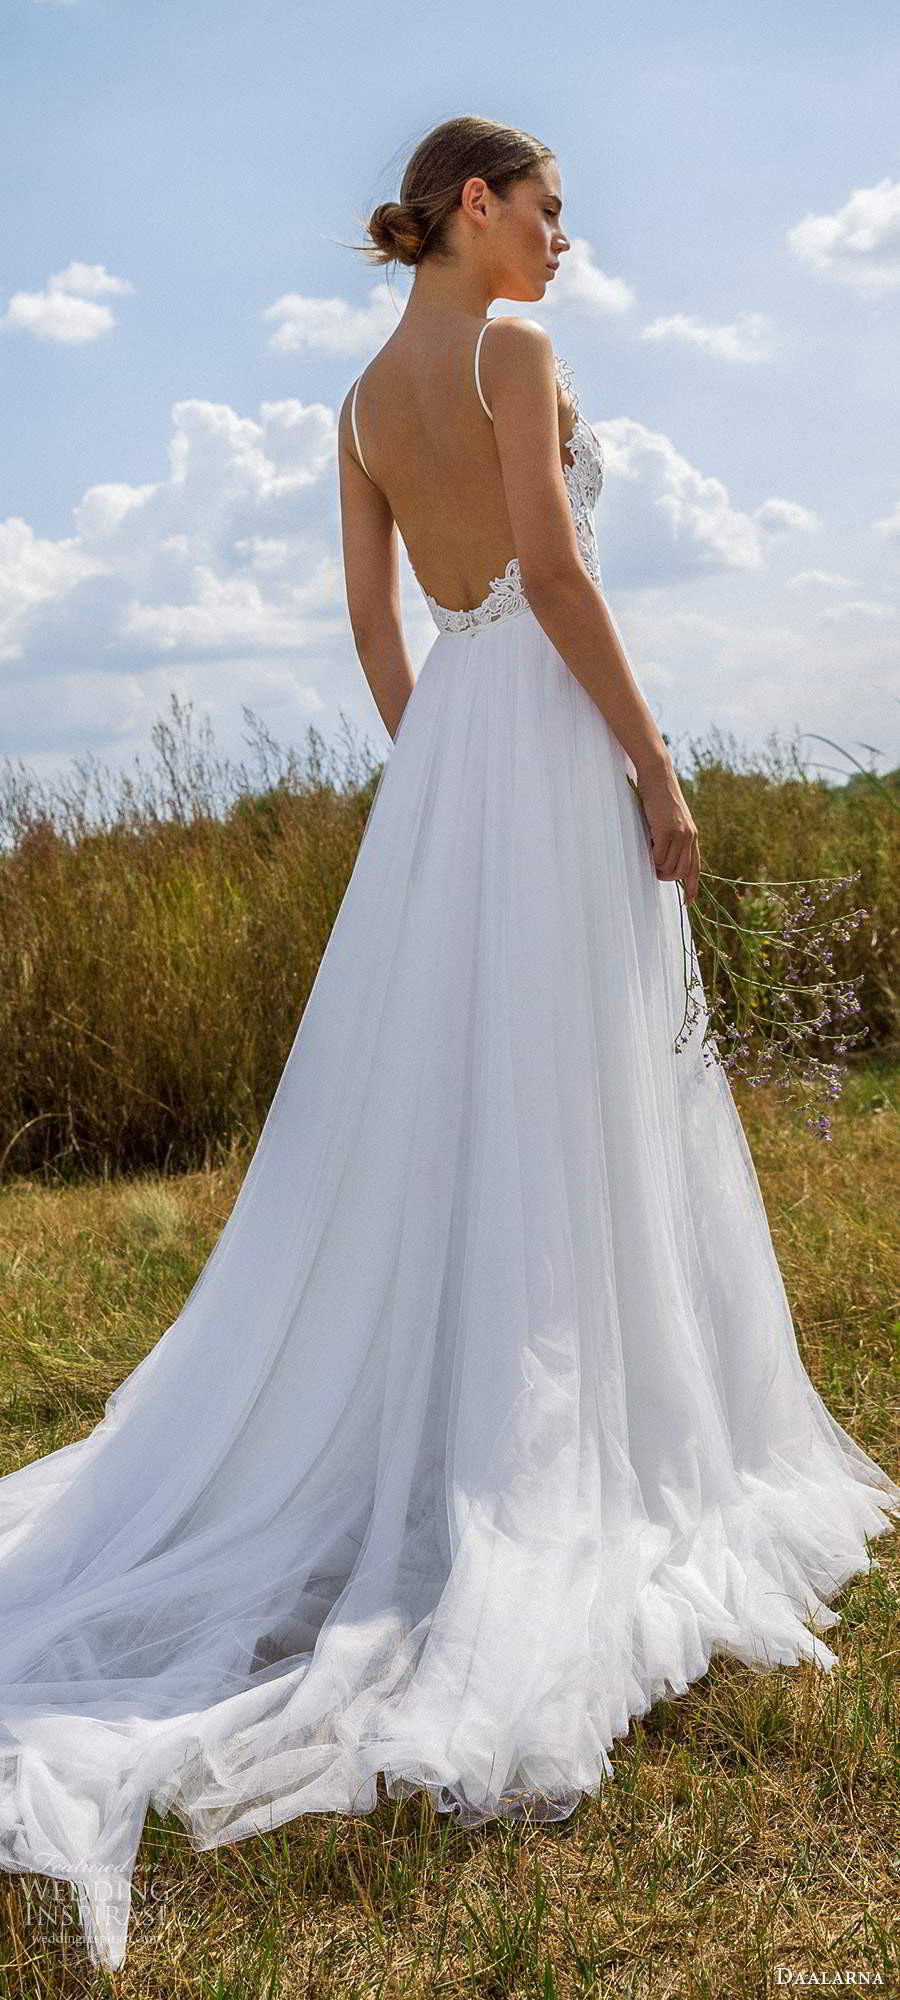 daalarna fall 2020 bridal sleeveles straps v neckline embellished lace bodice clean skirt a line wedding dress chapel train (20) bv